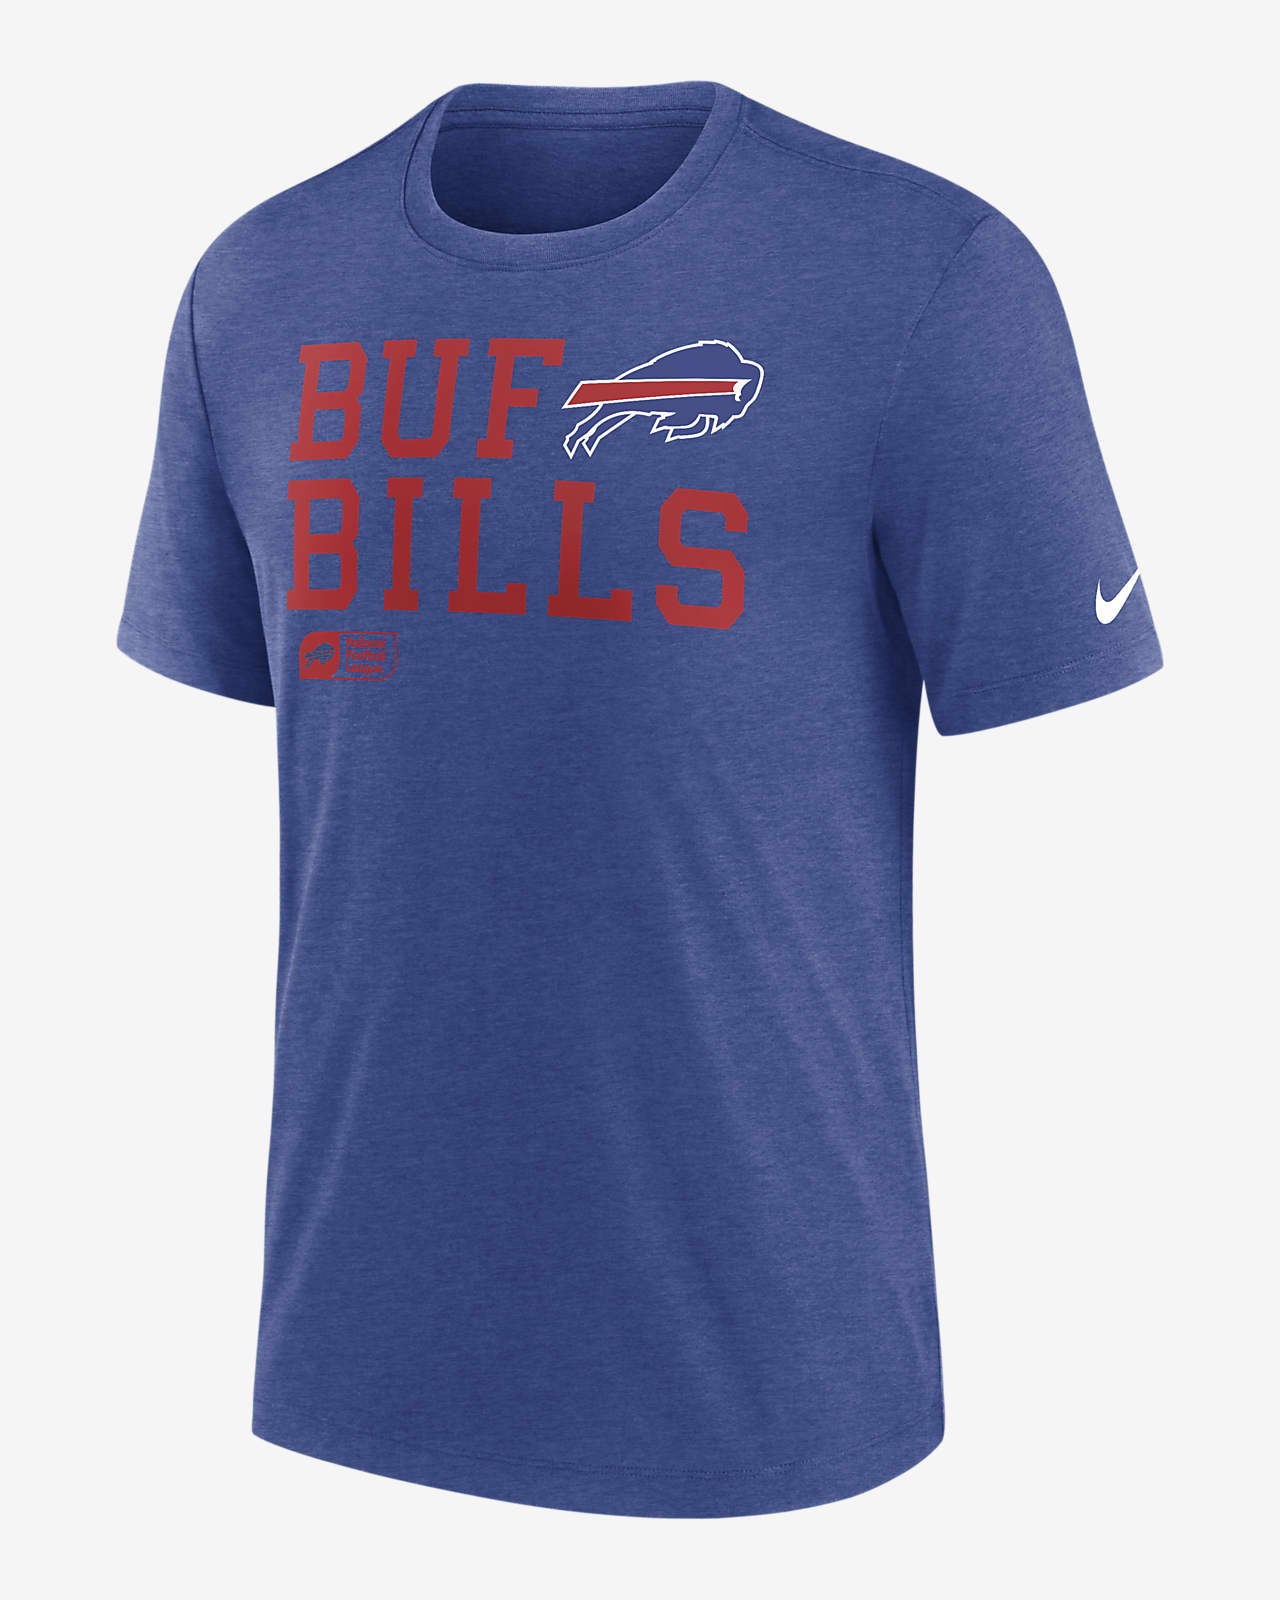 Buffalo Bills Overlap Lockup Men's Nike NFL T-Shirt